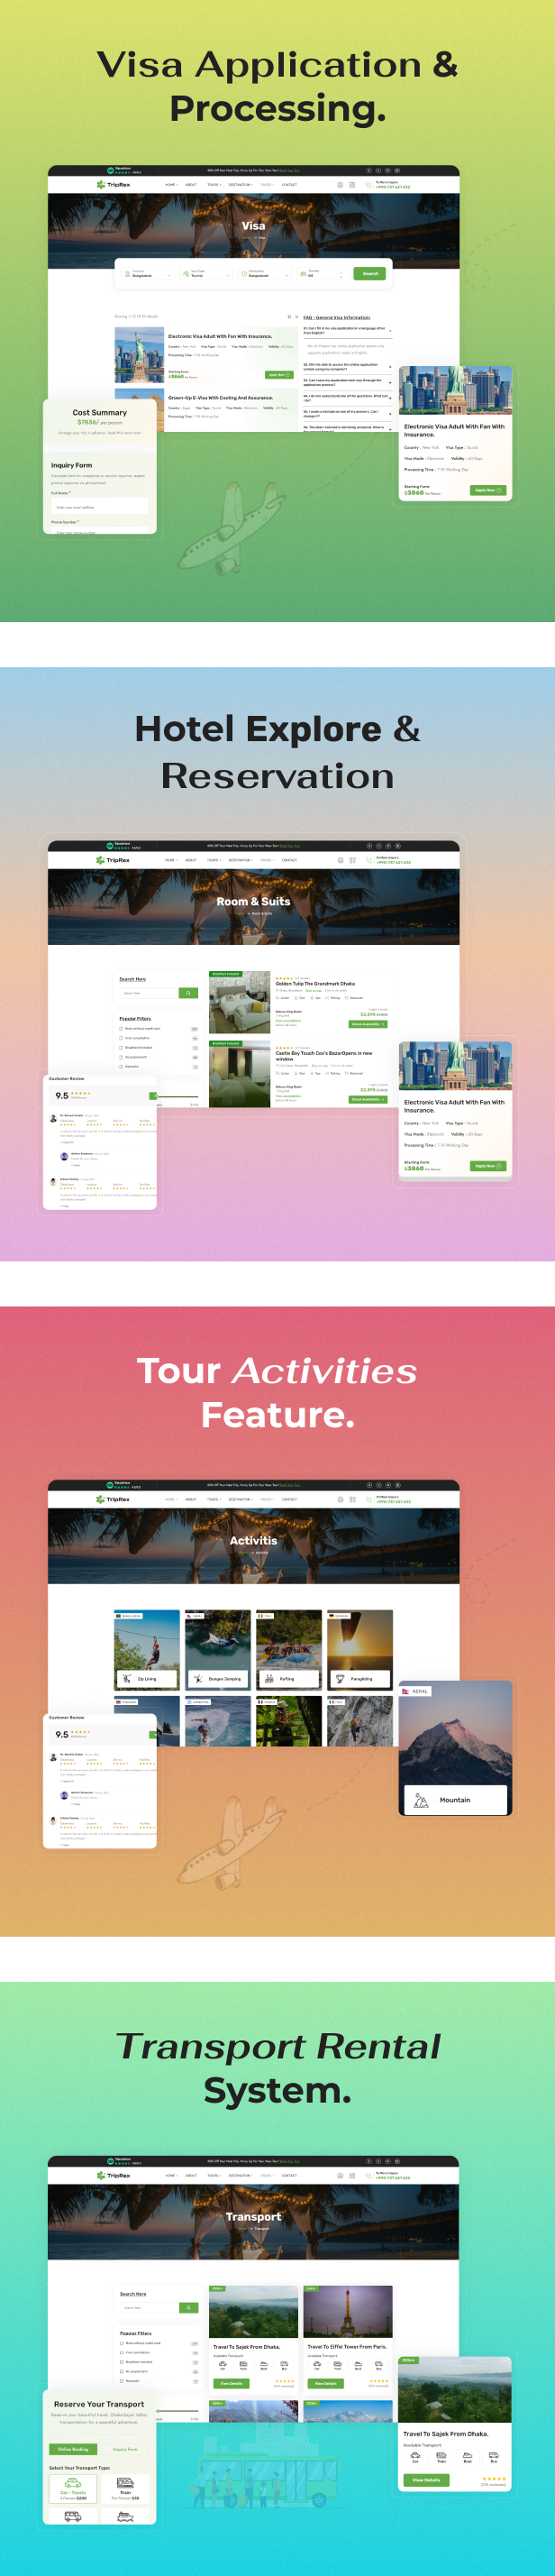 TripRex - Travel Agency and Tour Booking WordPress Theme - 3